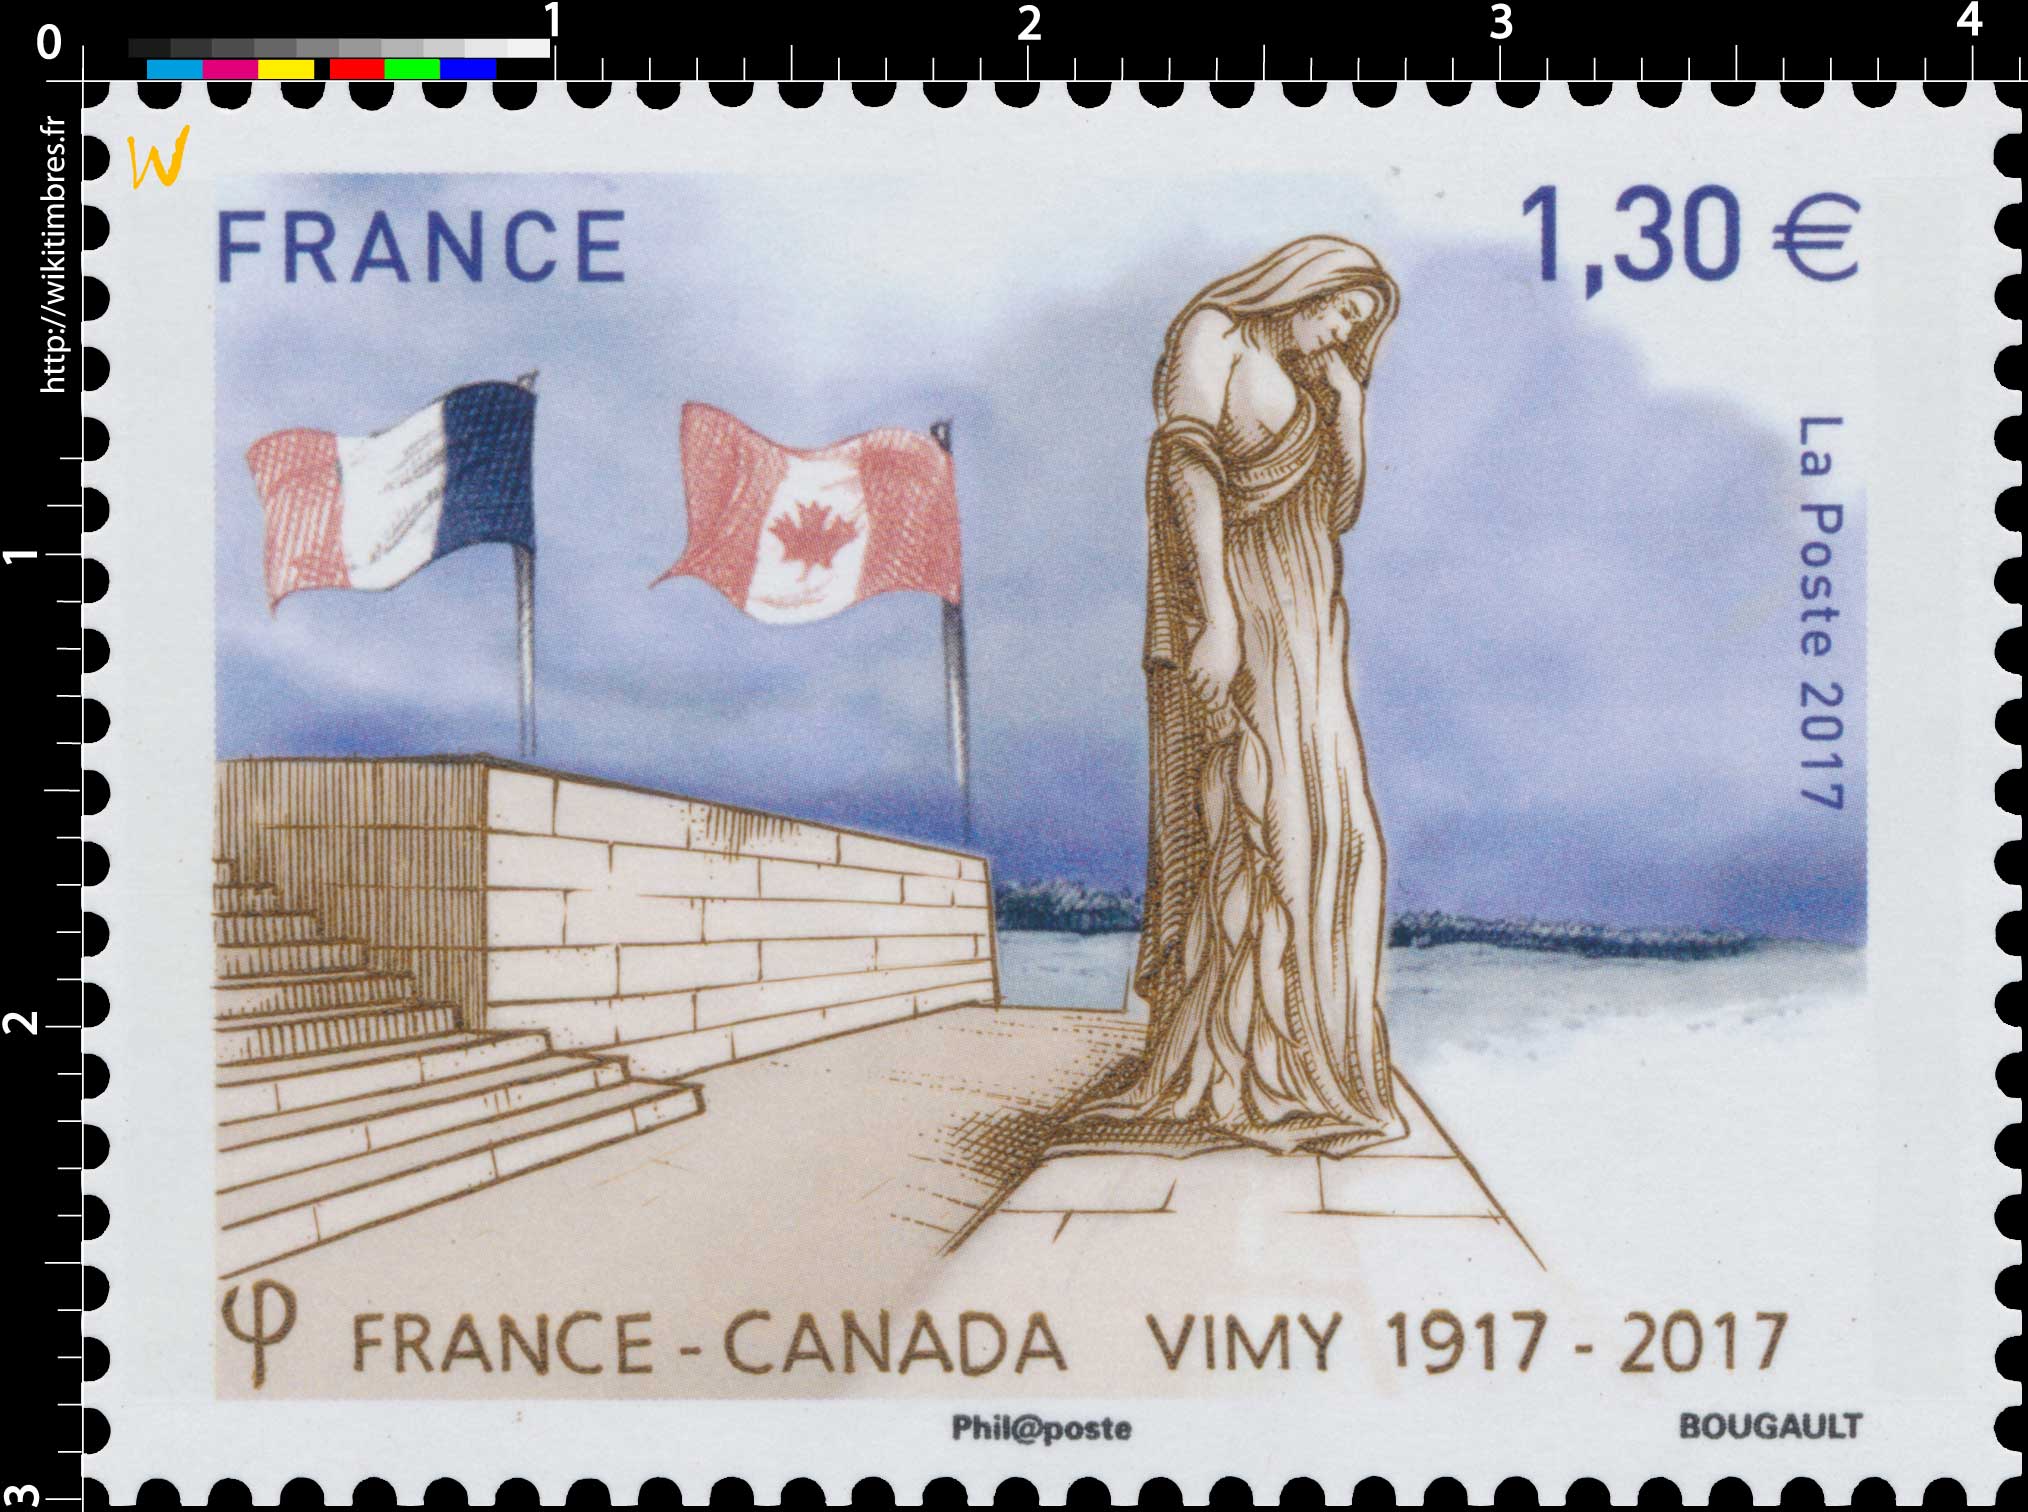 2017  France - Canada -   Vimy 1917 - 2017 